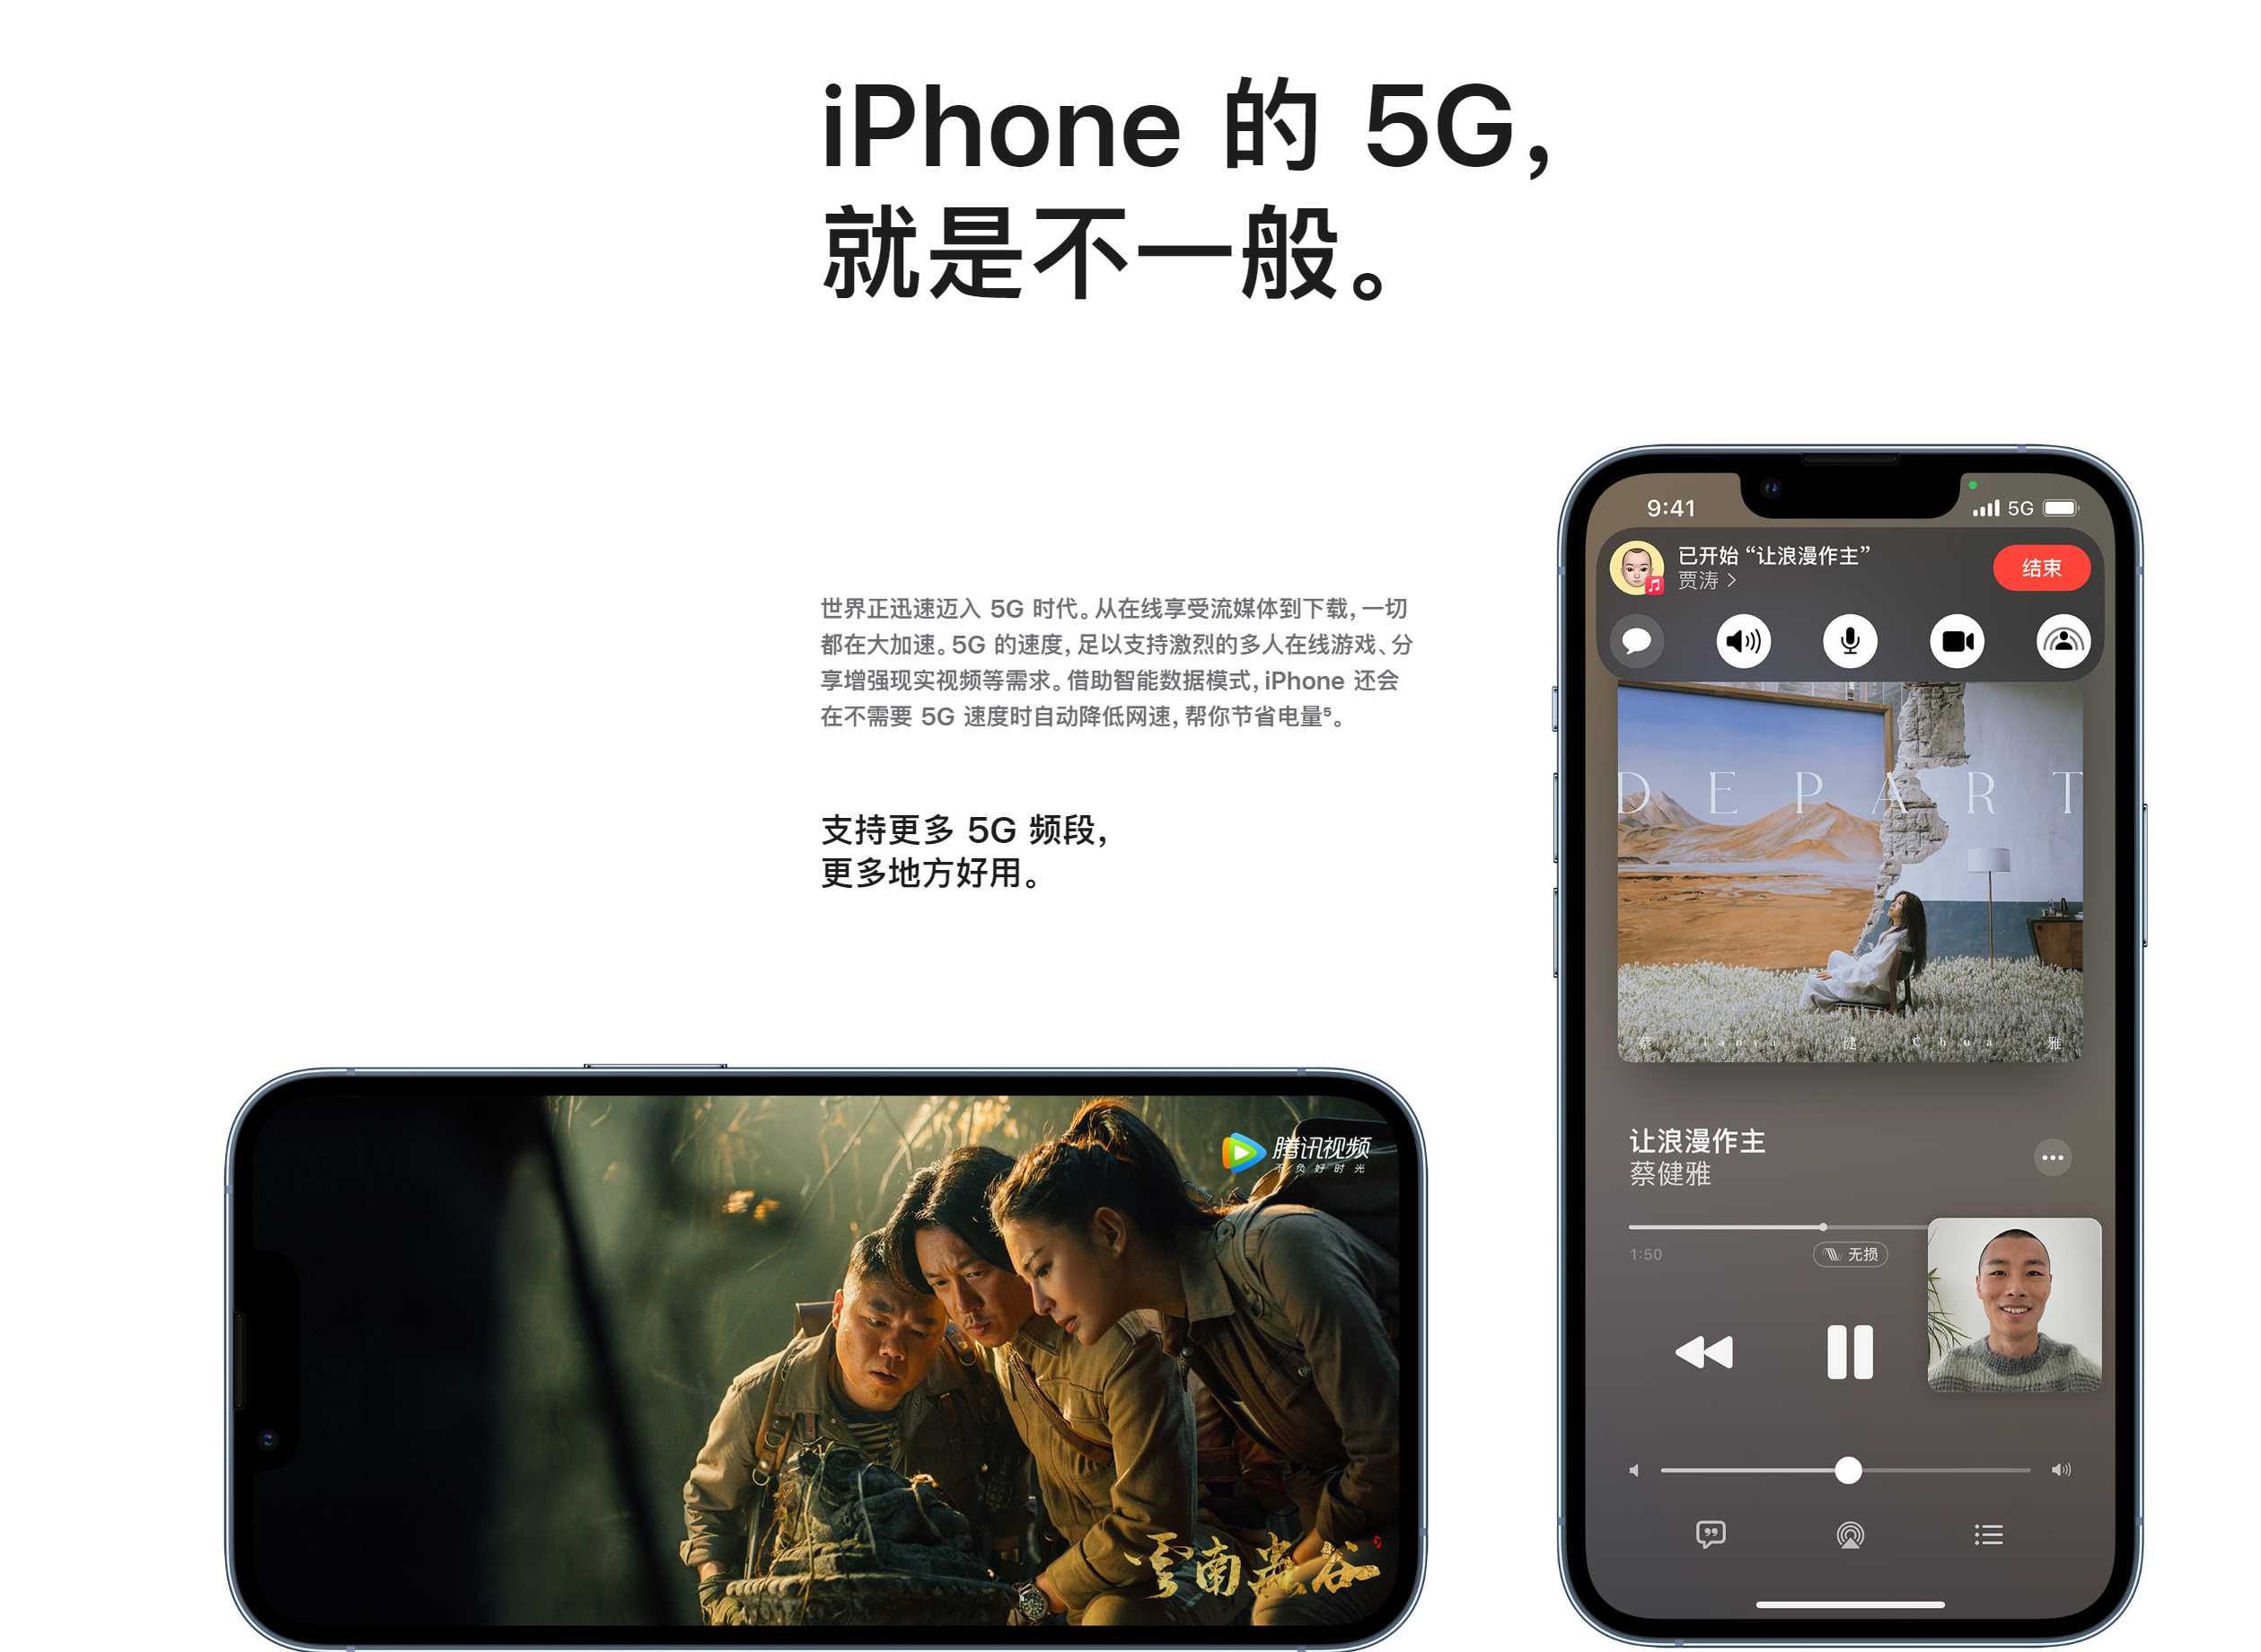 Apple中國的宣傳圖。為什麼需要強調是“iPhone”的5G才是不一般的呢？